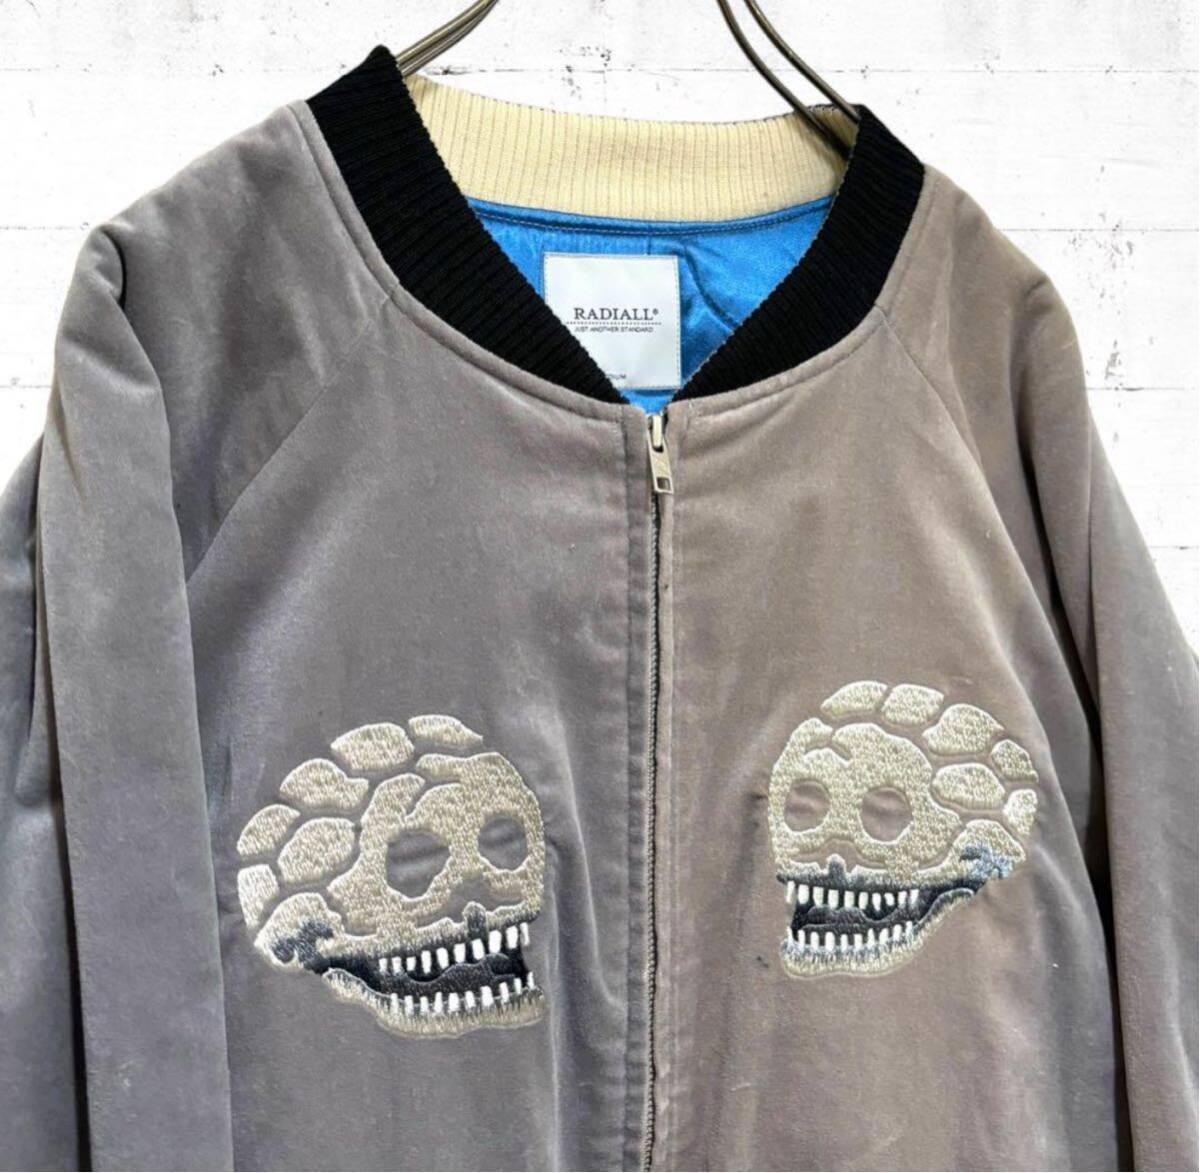 RADIALLno Zara si Hsu алый a жакет Japanese sovenir jacket Skull вышивка 23AWlatiaru блузон серый серый M размер велюр атлас 